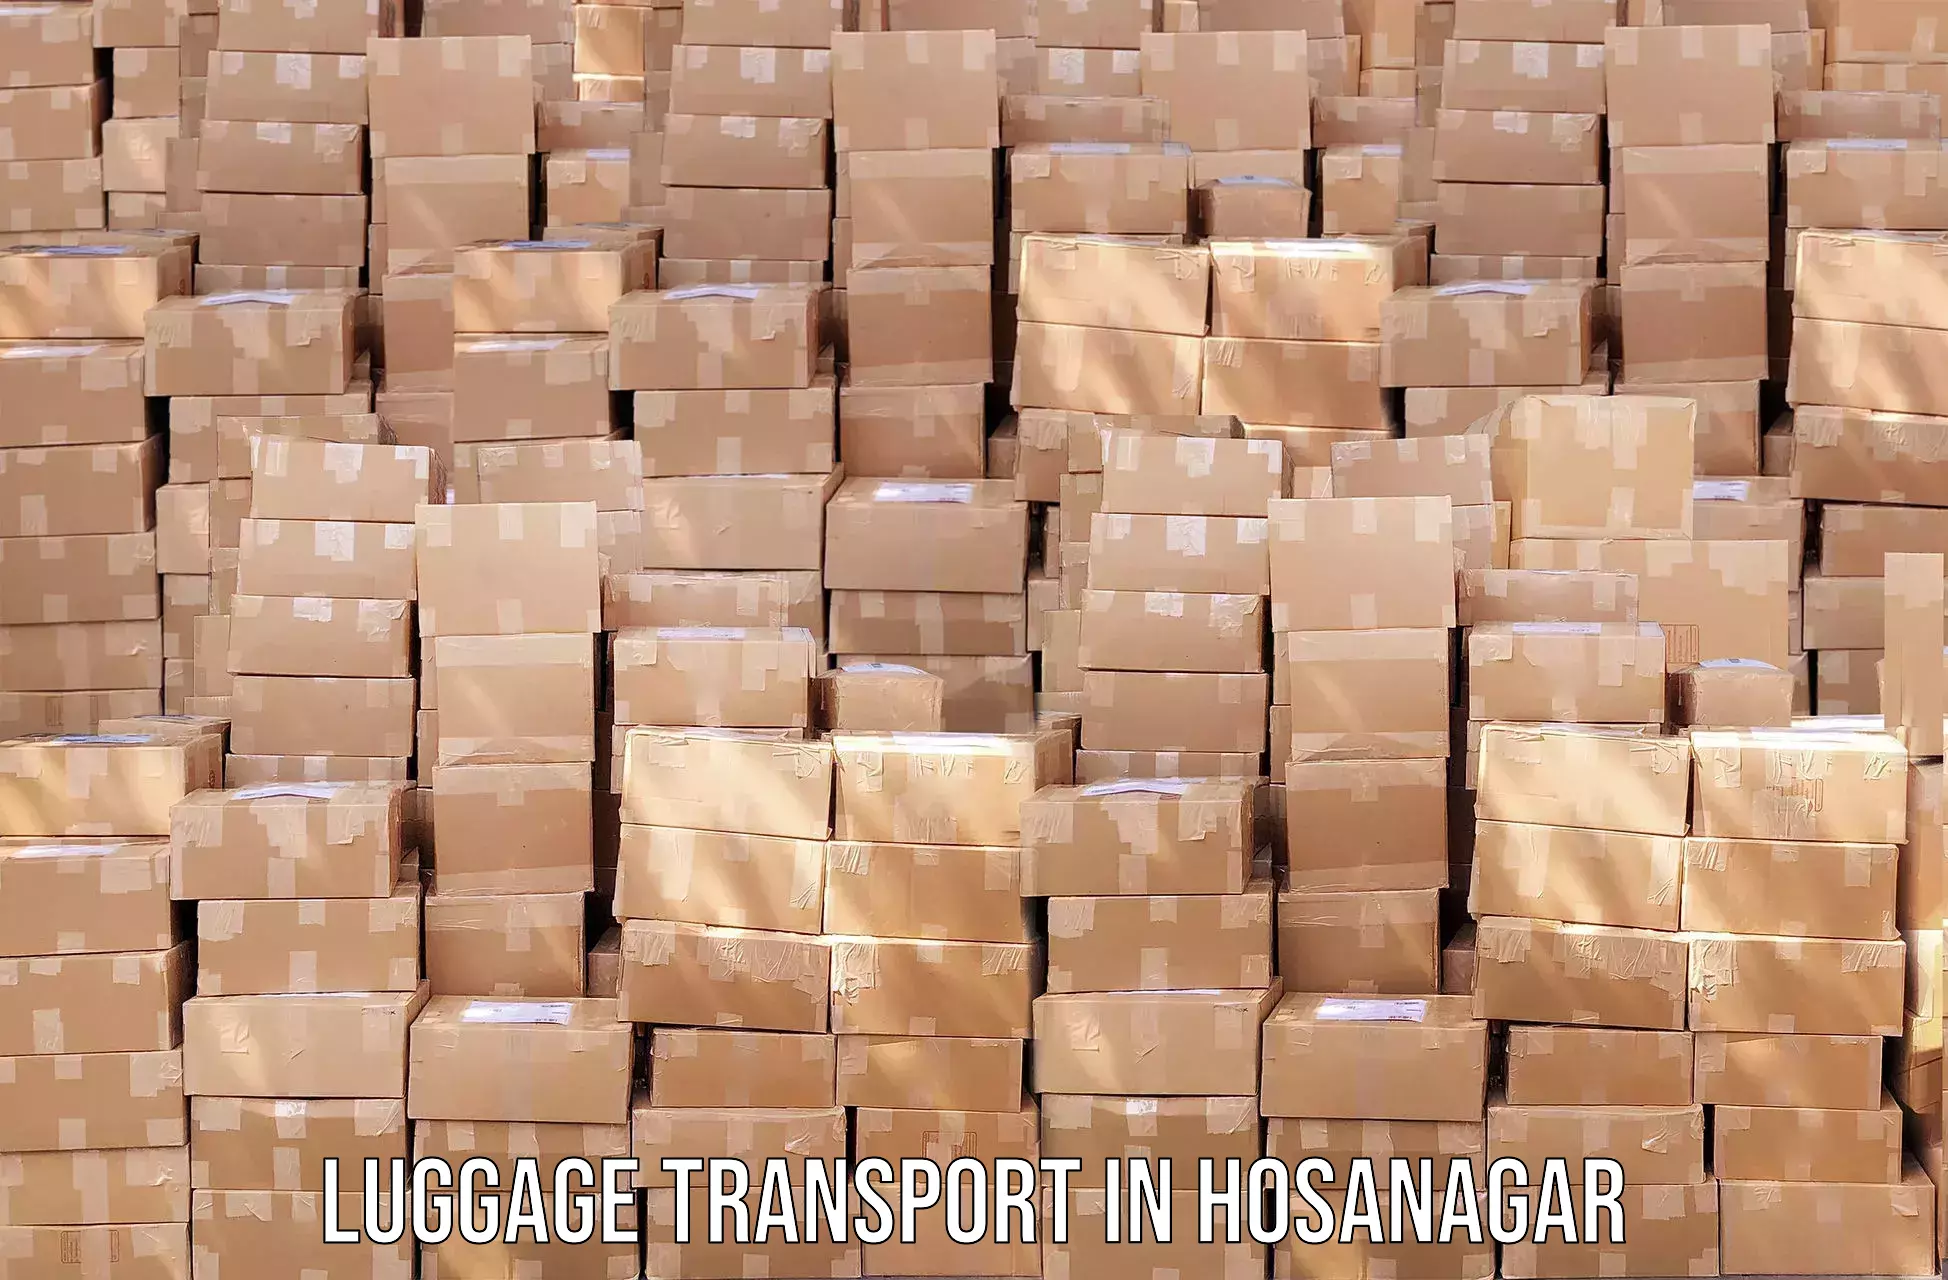 Professional baggage transport in Hosanagar